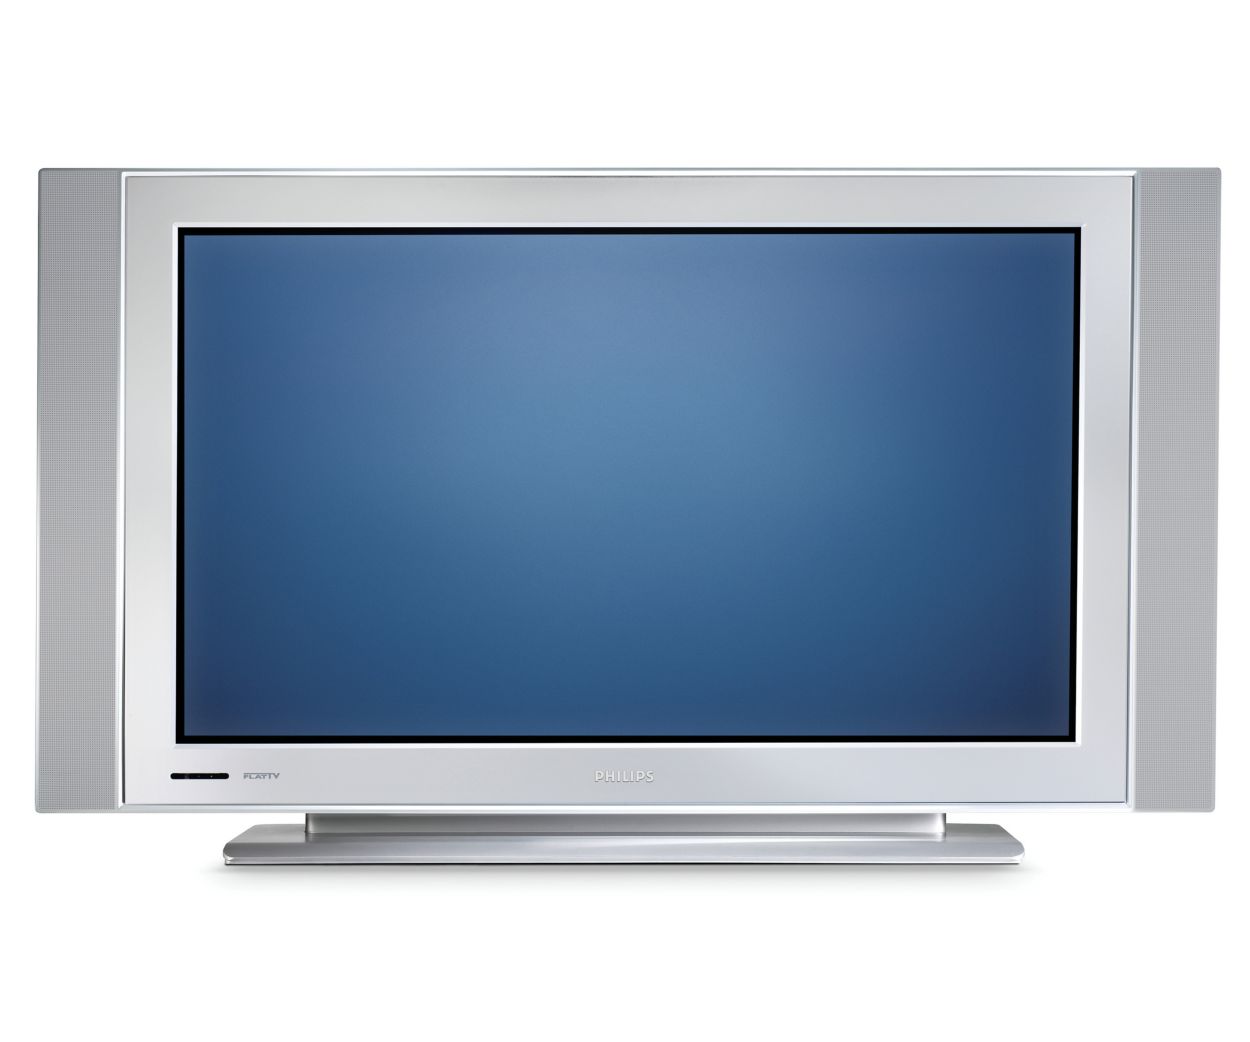 Digital Widescreen Flat Tv 32pf5520d79 Philips 0610